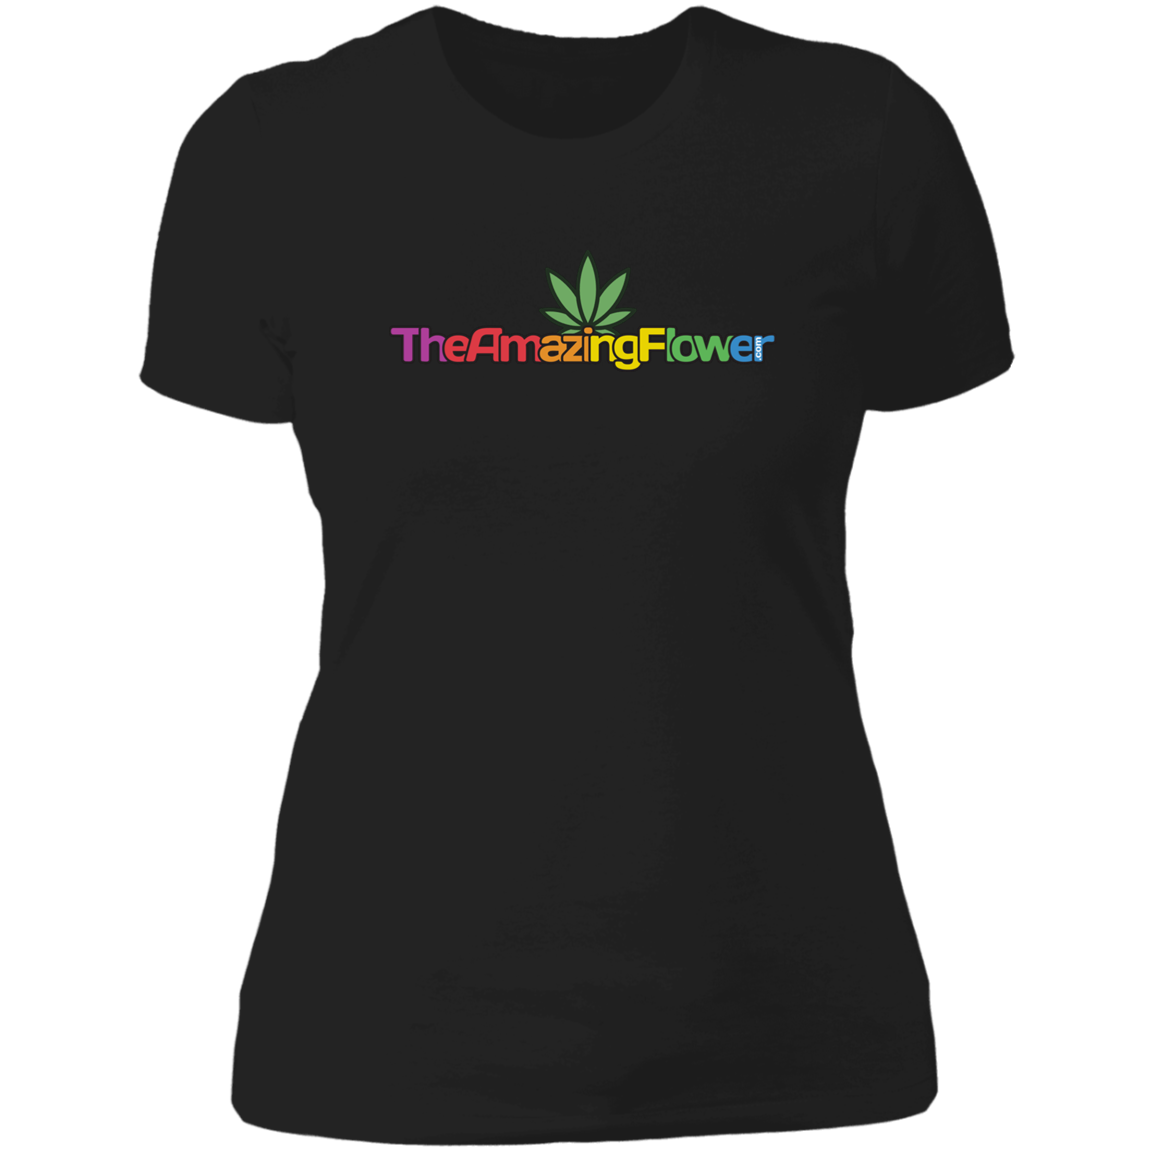 Hemp Leaf Logo Women's T-Shirt from TheAmazingFlower.com (Black)